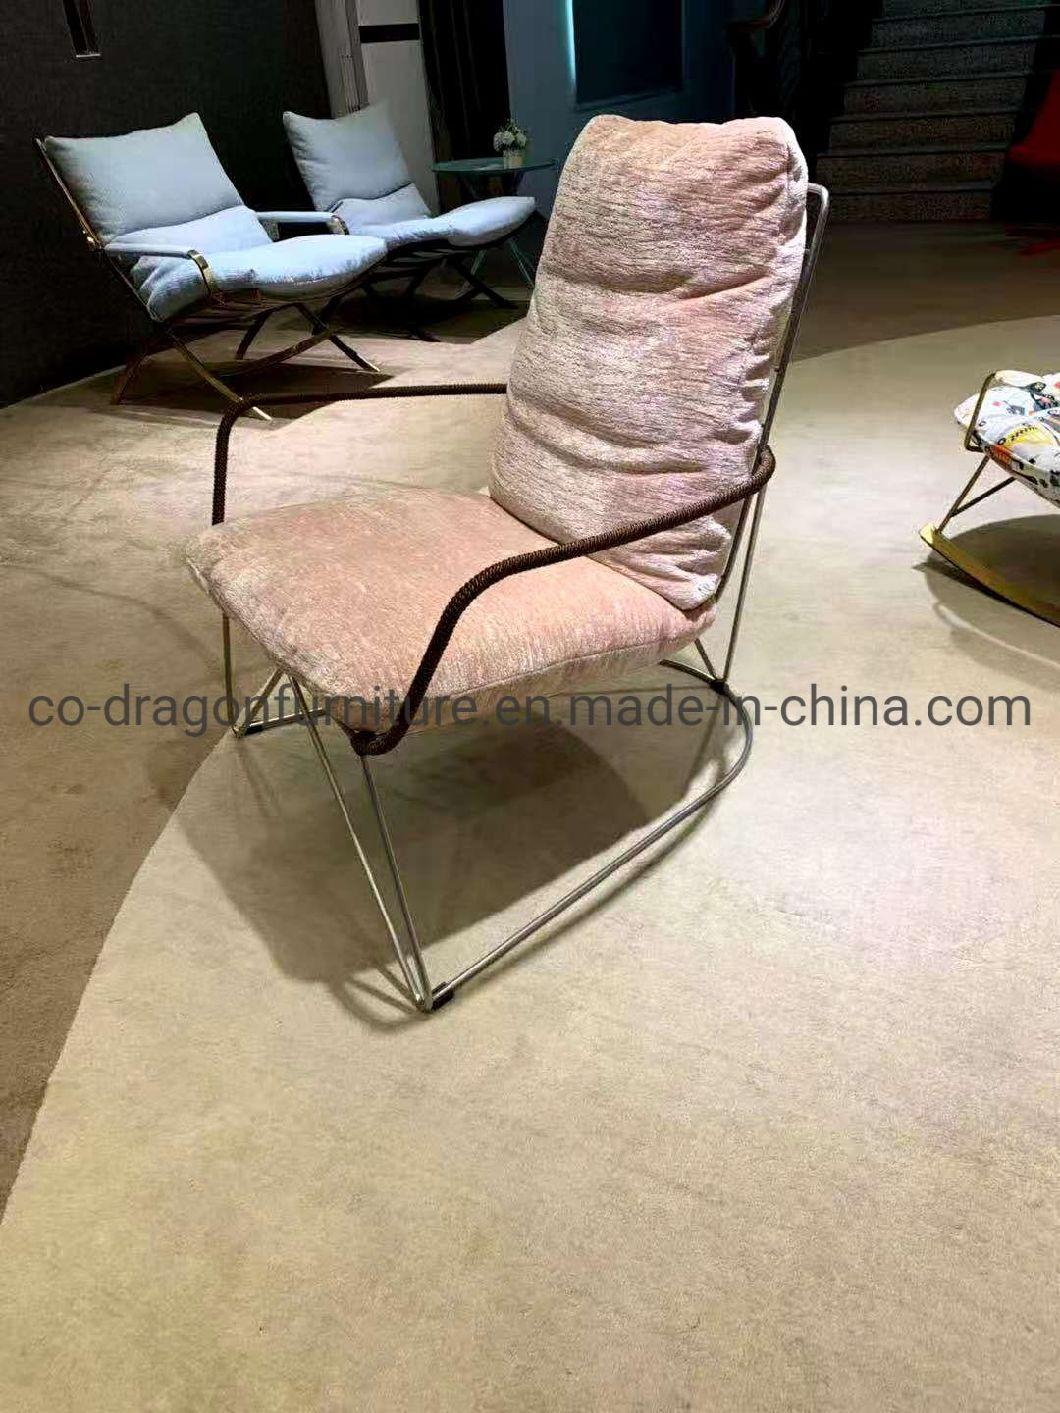 Unique Design Fabric Leisure Sofa Chair for Living Room Furniture